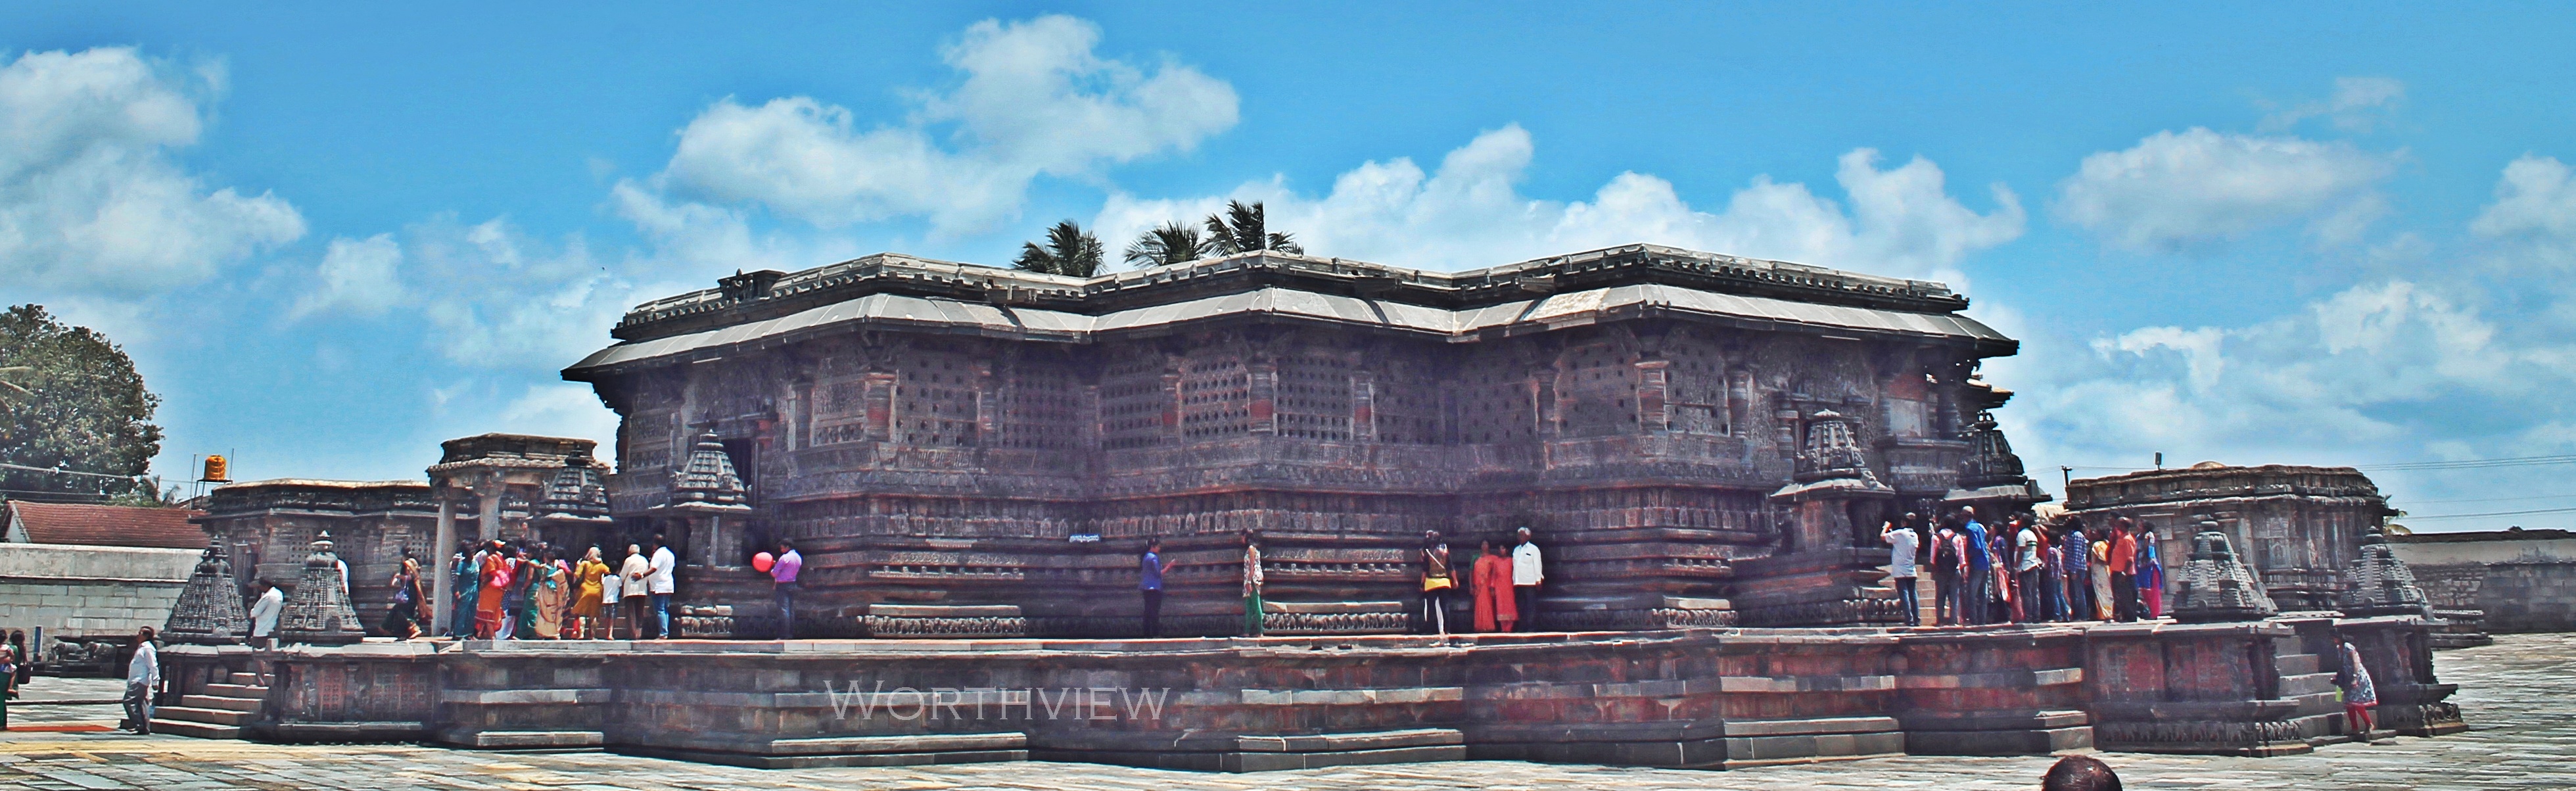 Belur chennakesava temple view